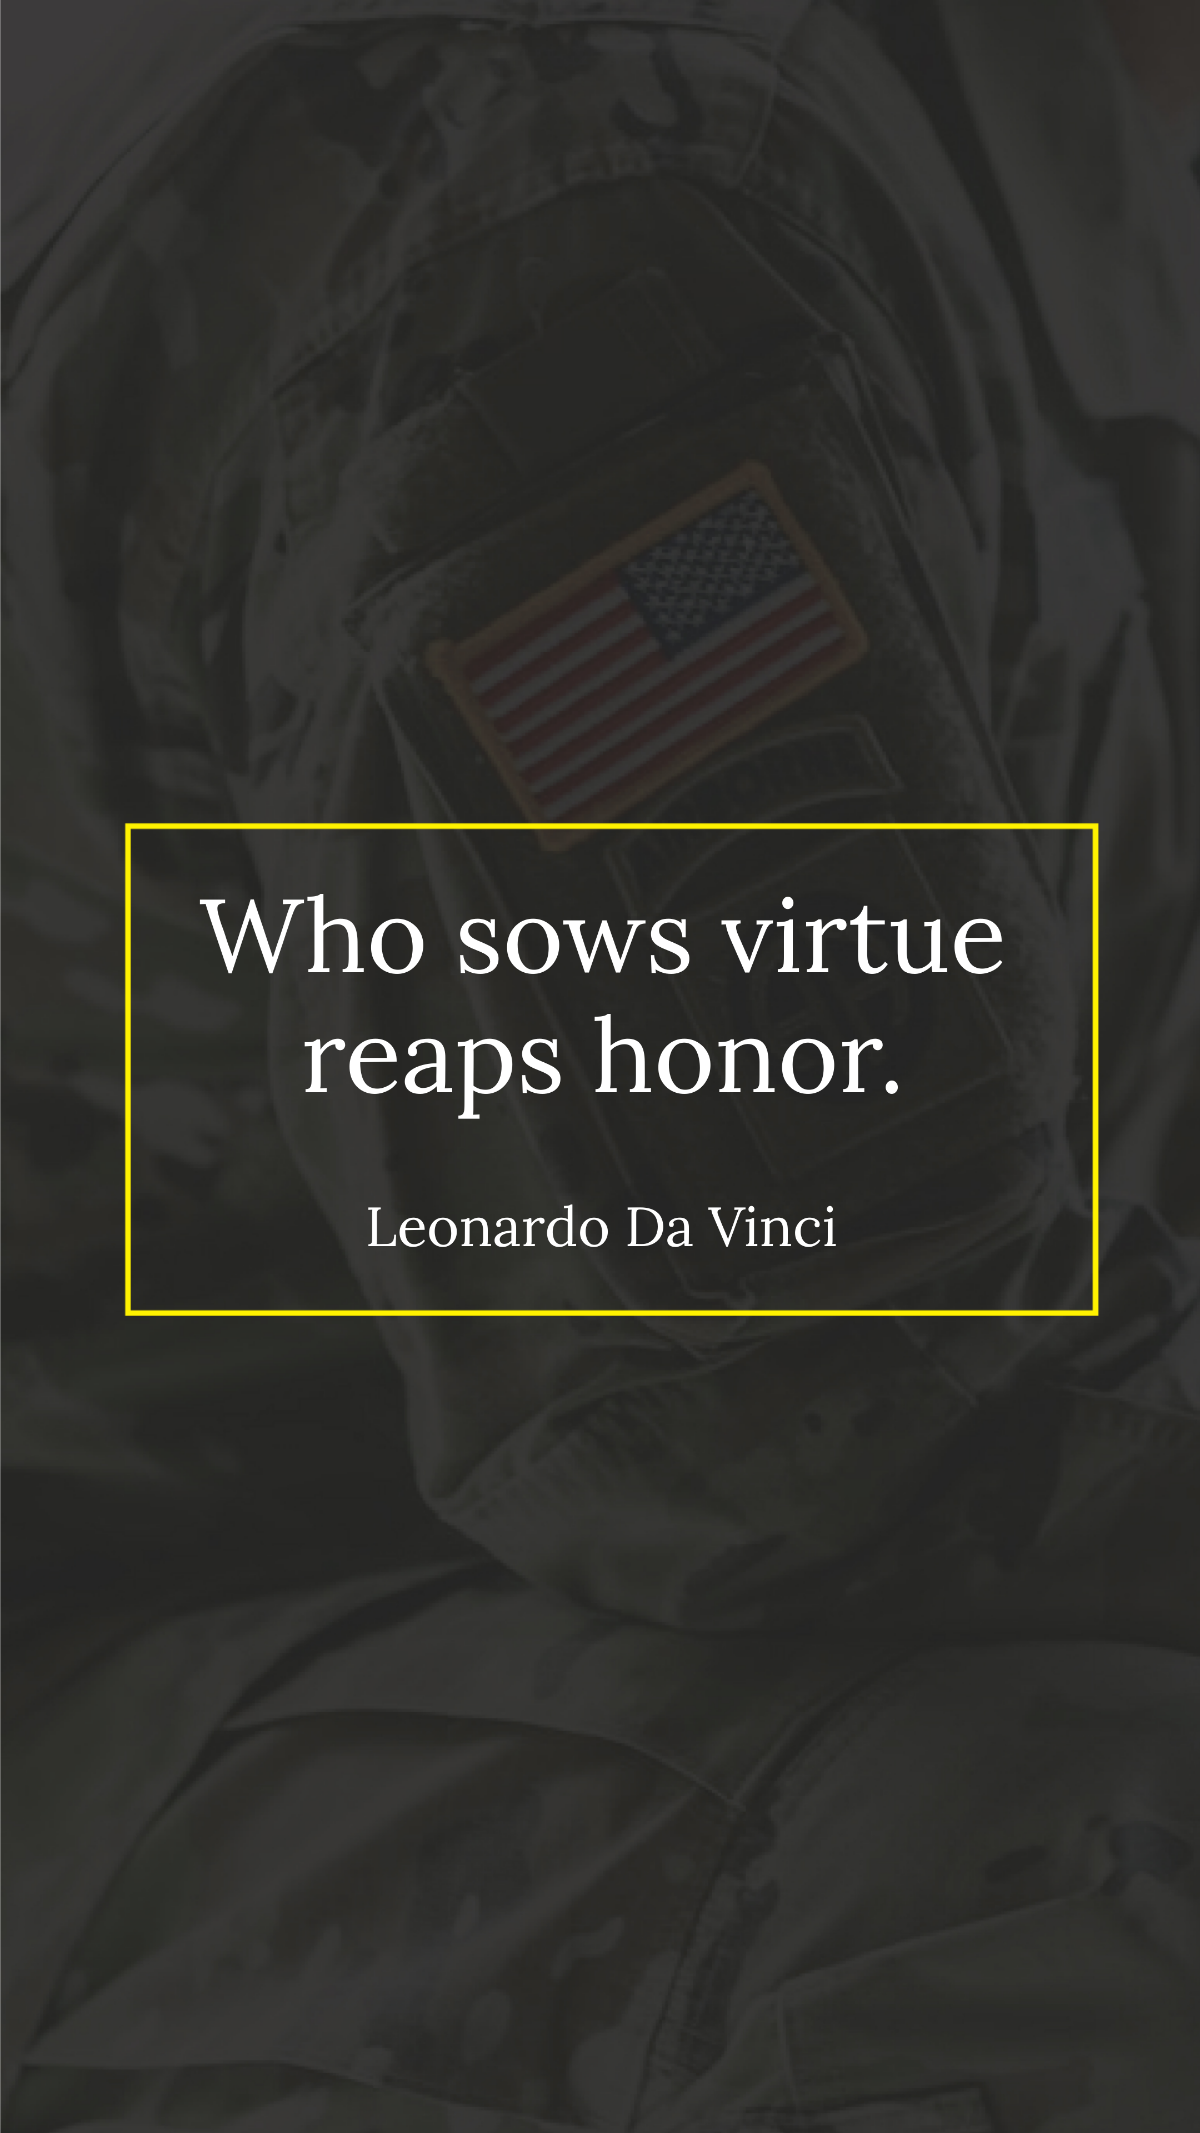 Leonardo da Vinci - Who sows virtue reaps honor.